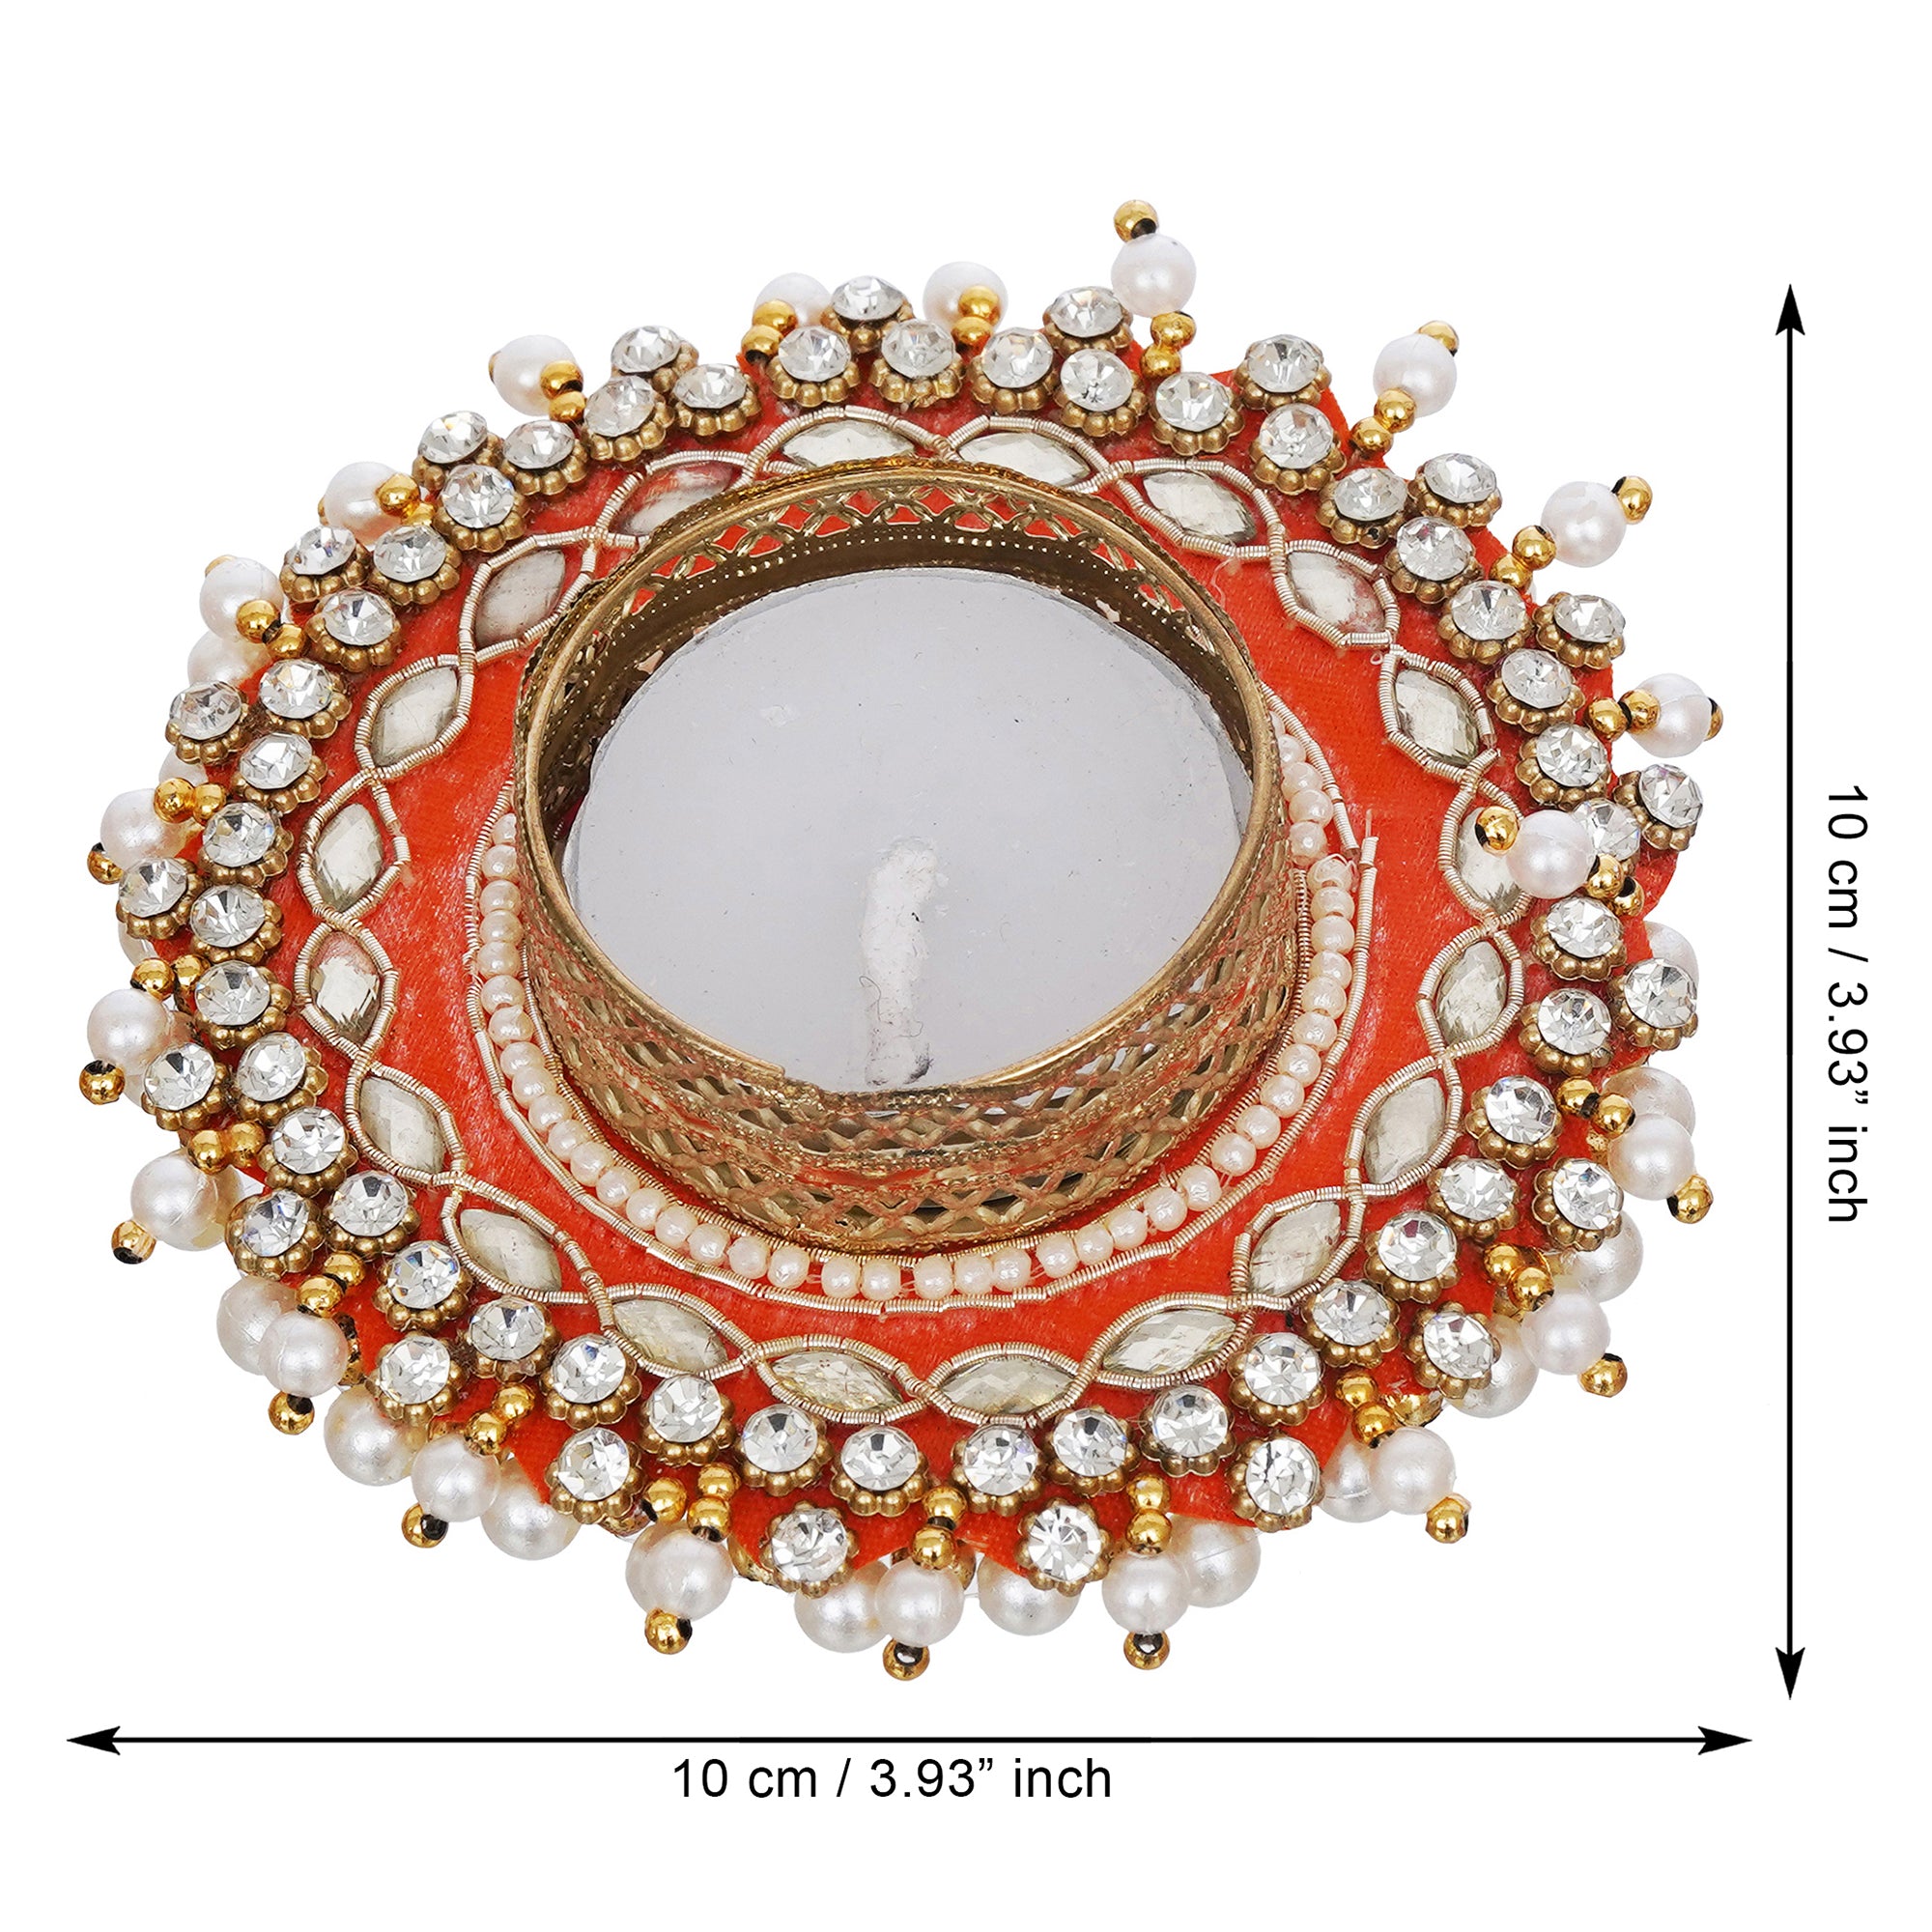 eCraftIndia Set of 6 Round Shaped Diamond Beads and Pearls Decorative Tea Light Candle Holders 3